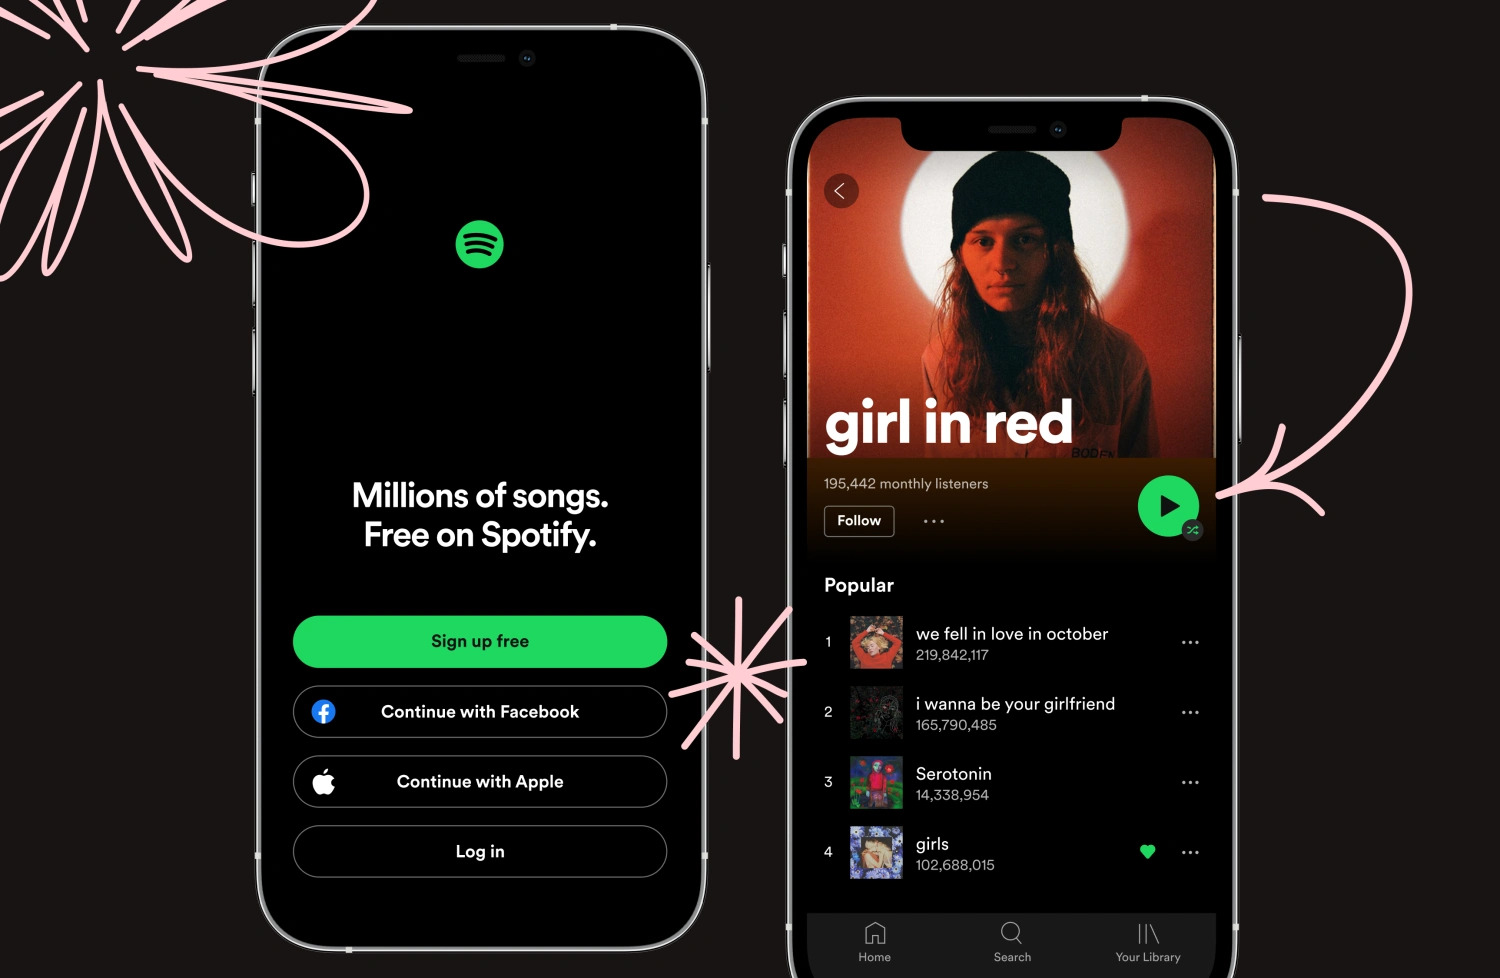 dark mode design on Spotify